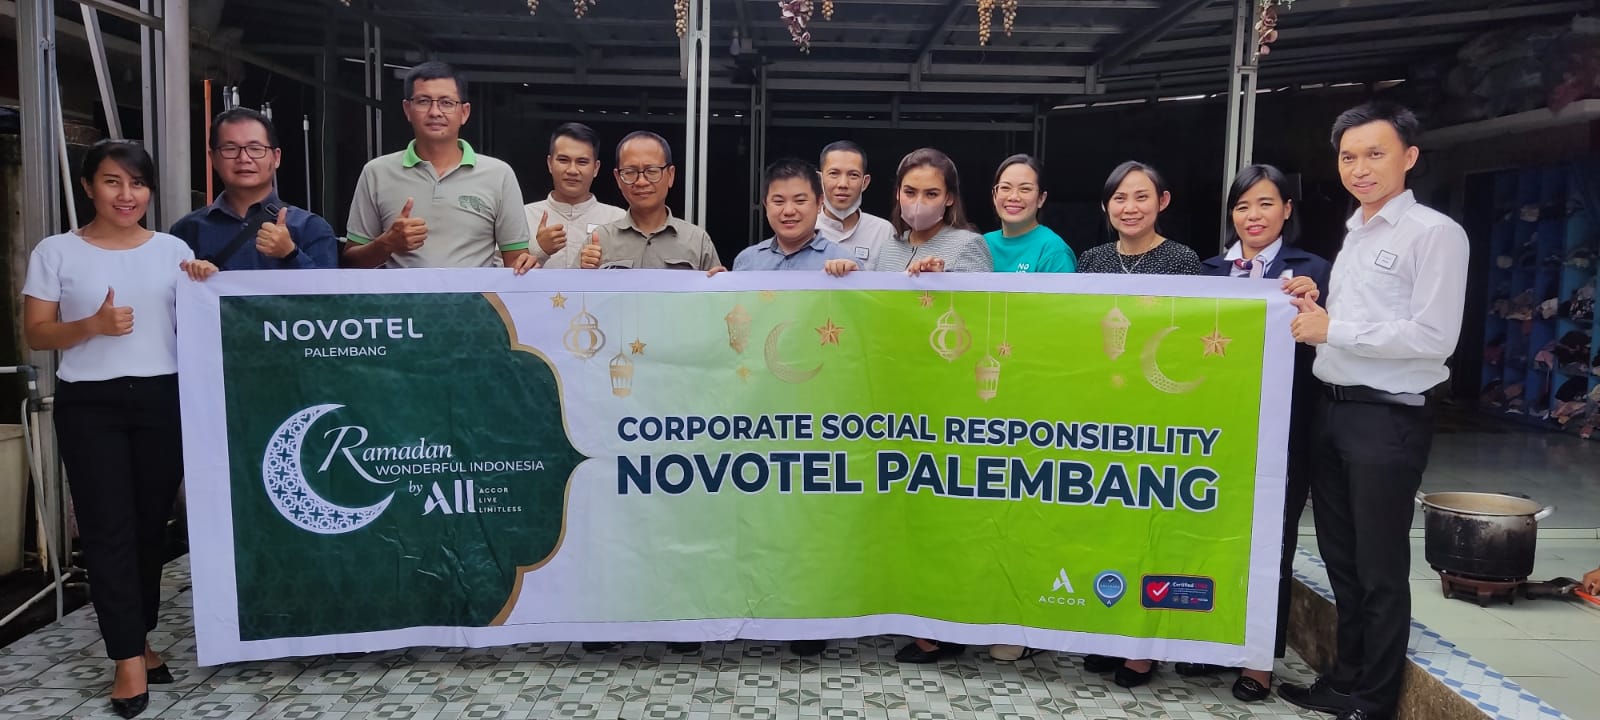 Novotel Palembang Salurkan Bantuan Beras ke Yayasan Bagus Mandiri Insani